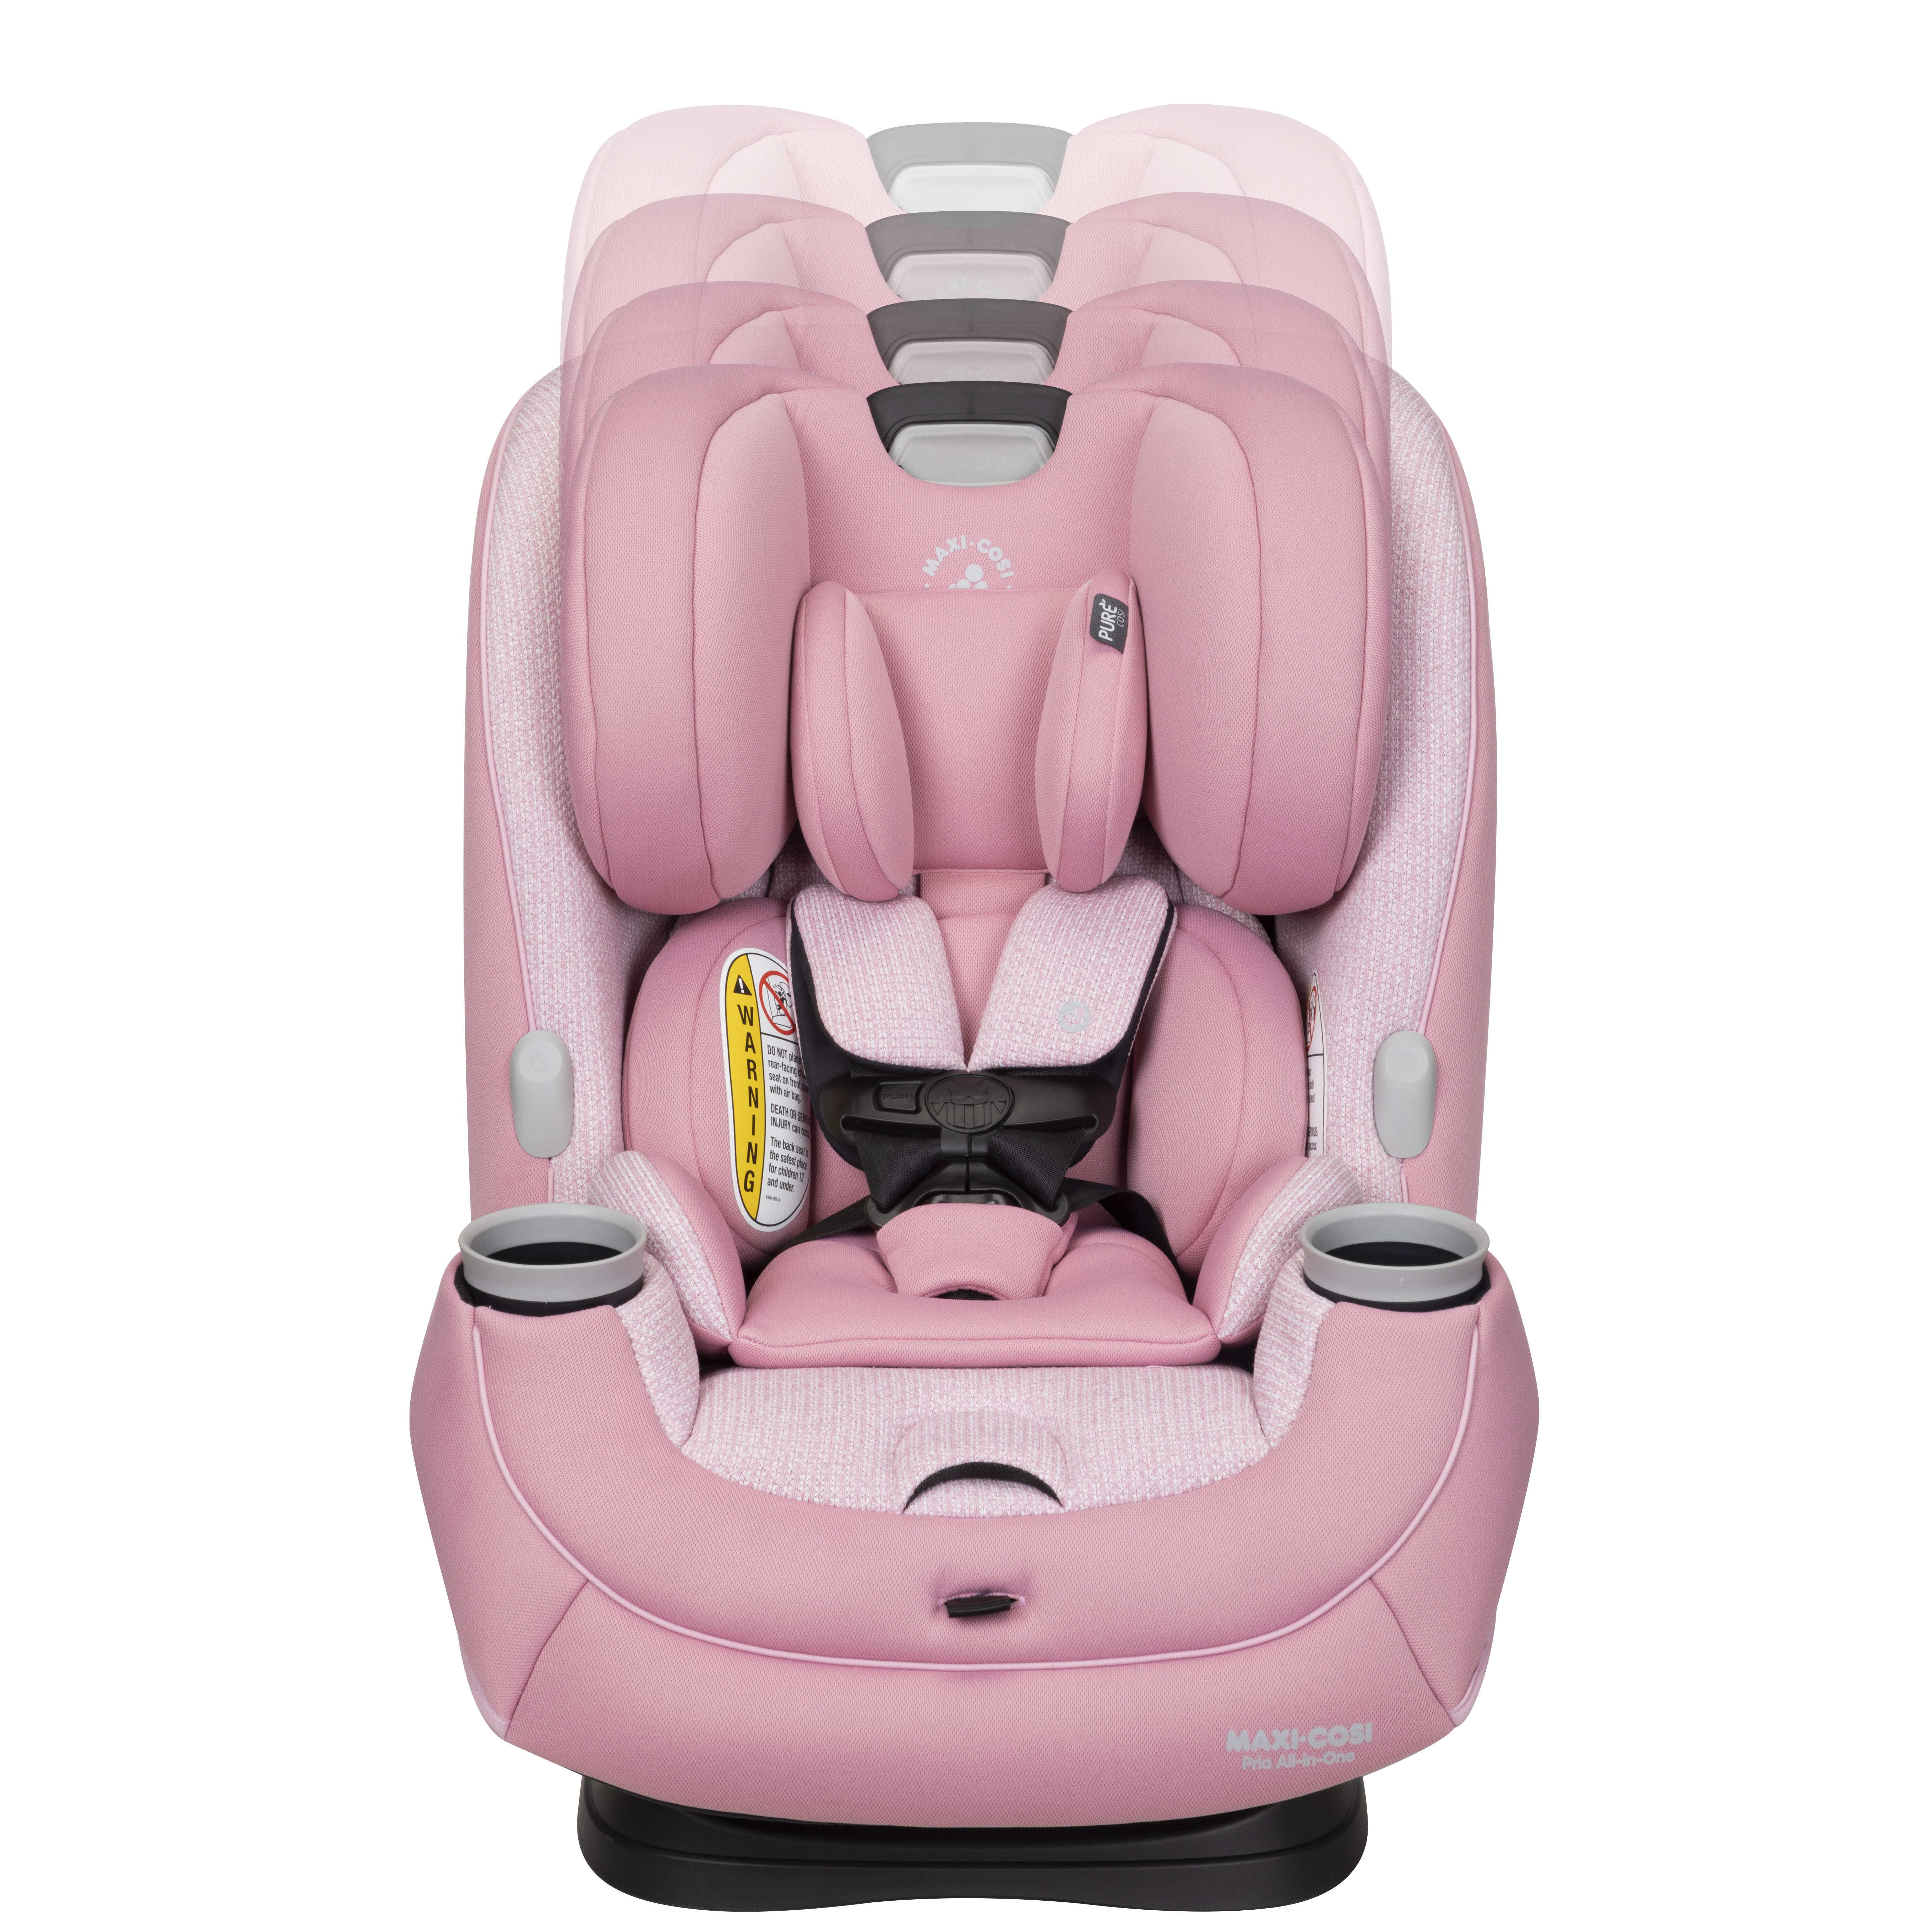 Maxi-Cosi Pria All-in-One Convertible Car Seat, Rose Pink Sweater – PureCosi, - image 2 of 6